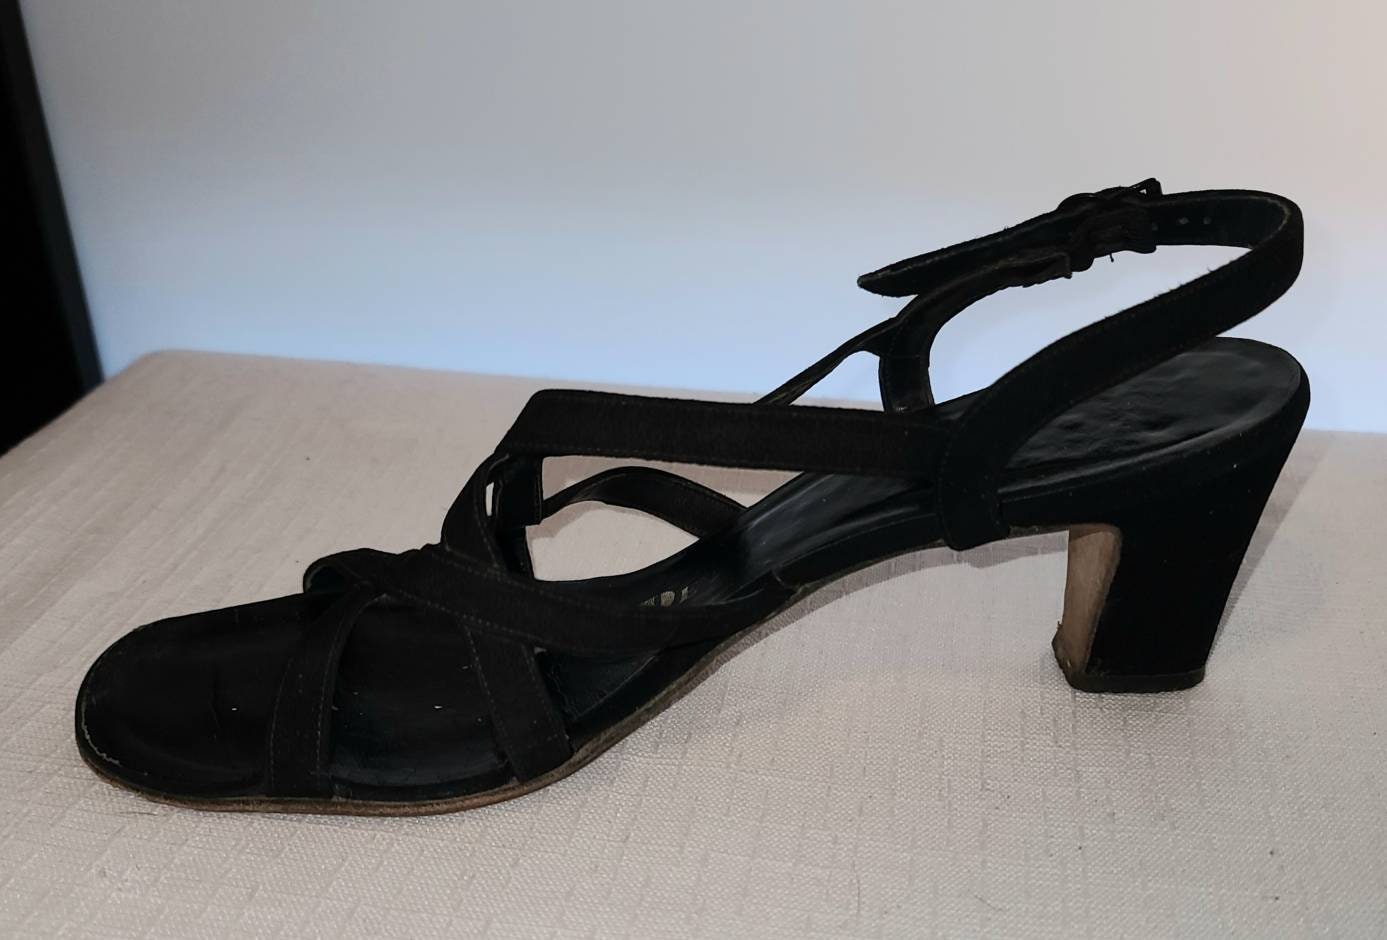 Vintage Evening Sandals 1950s 60s Black Suede Open Weave Sandals Shoes Small Heel Mid Century Rockabilly 7.5